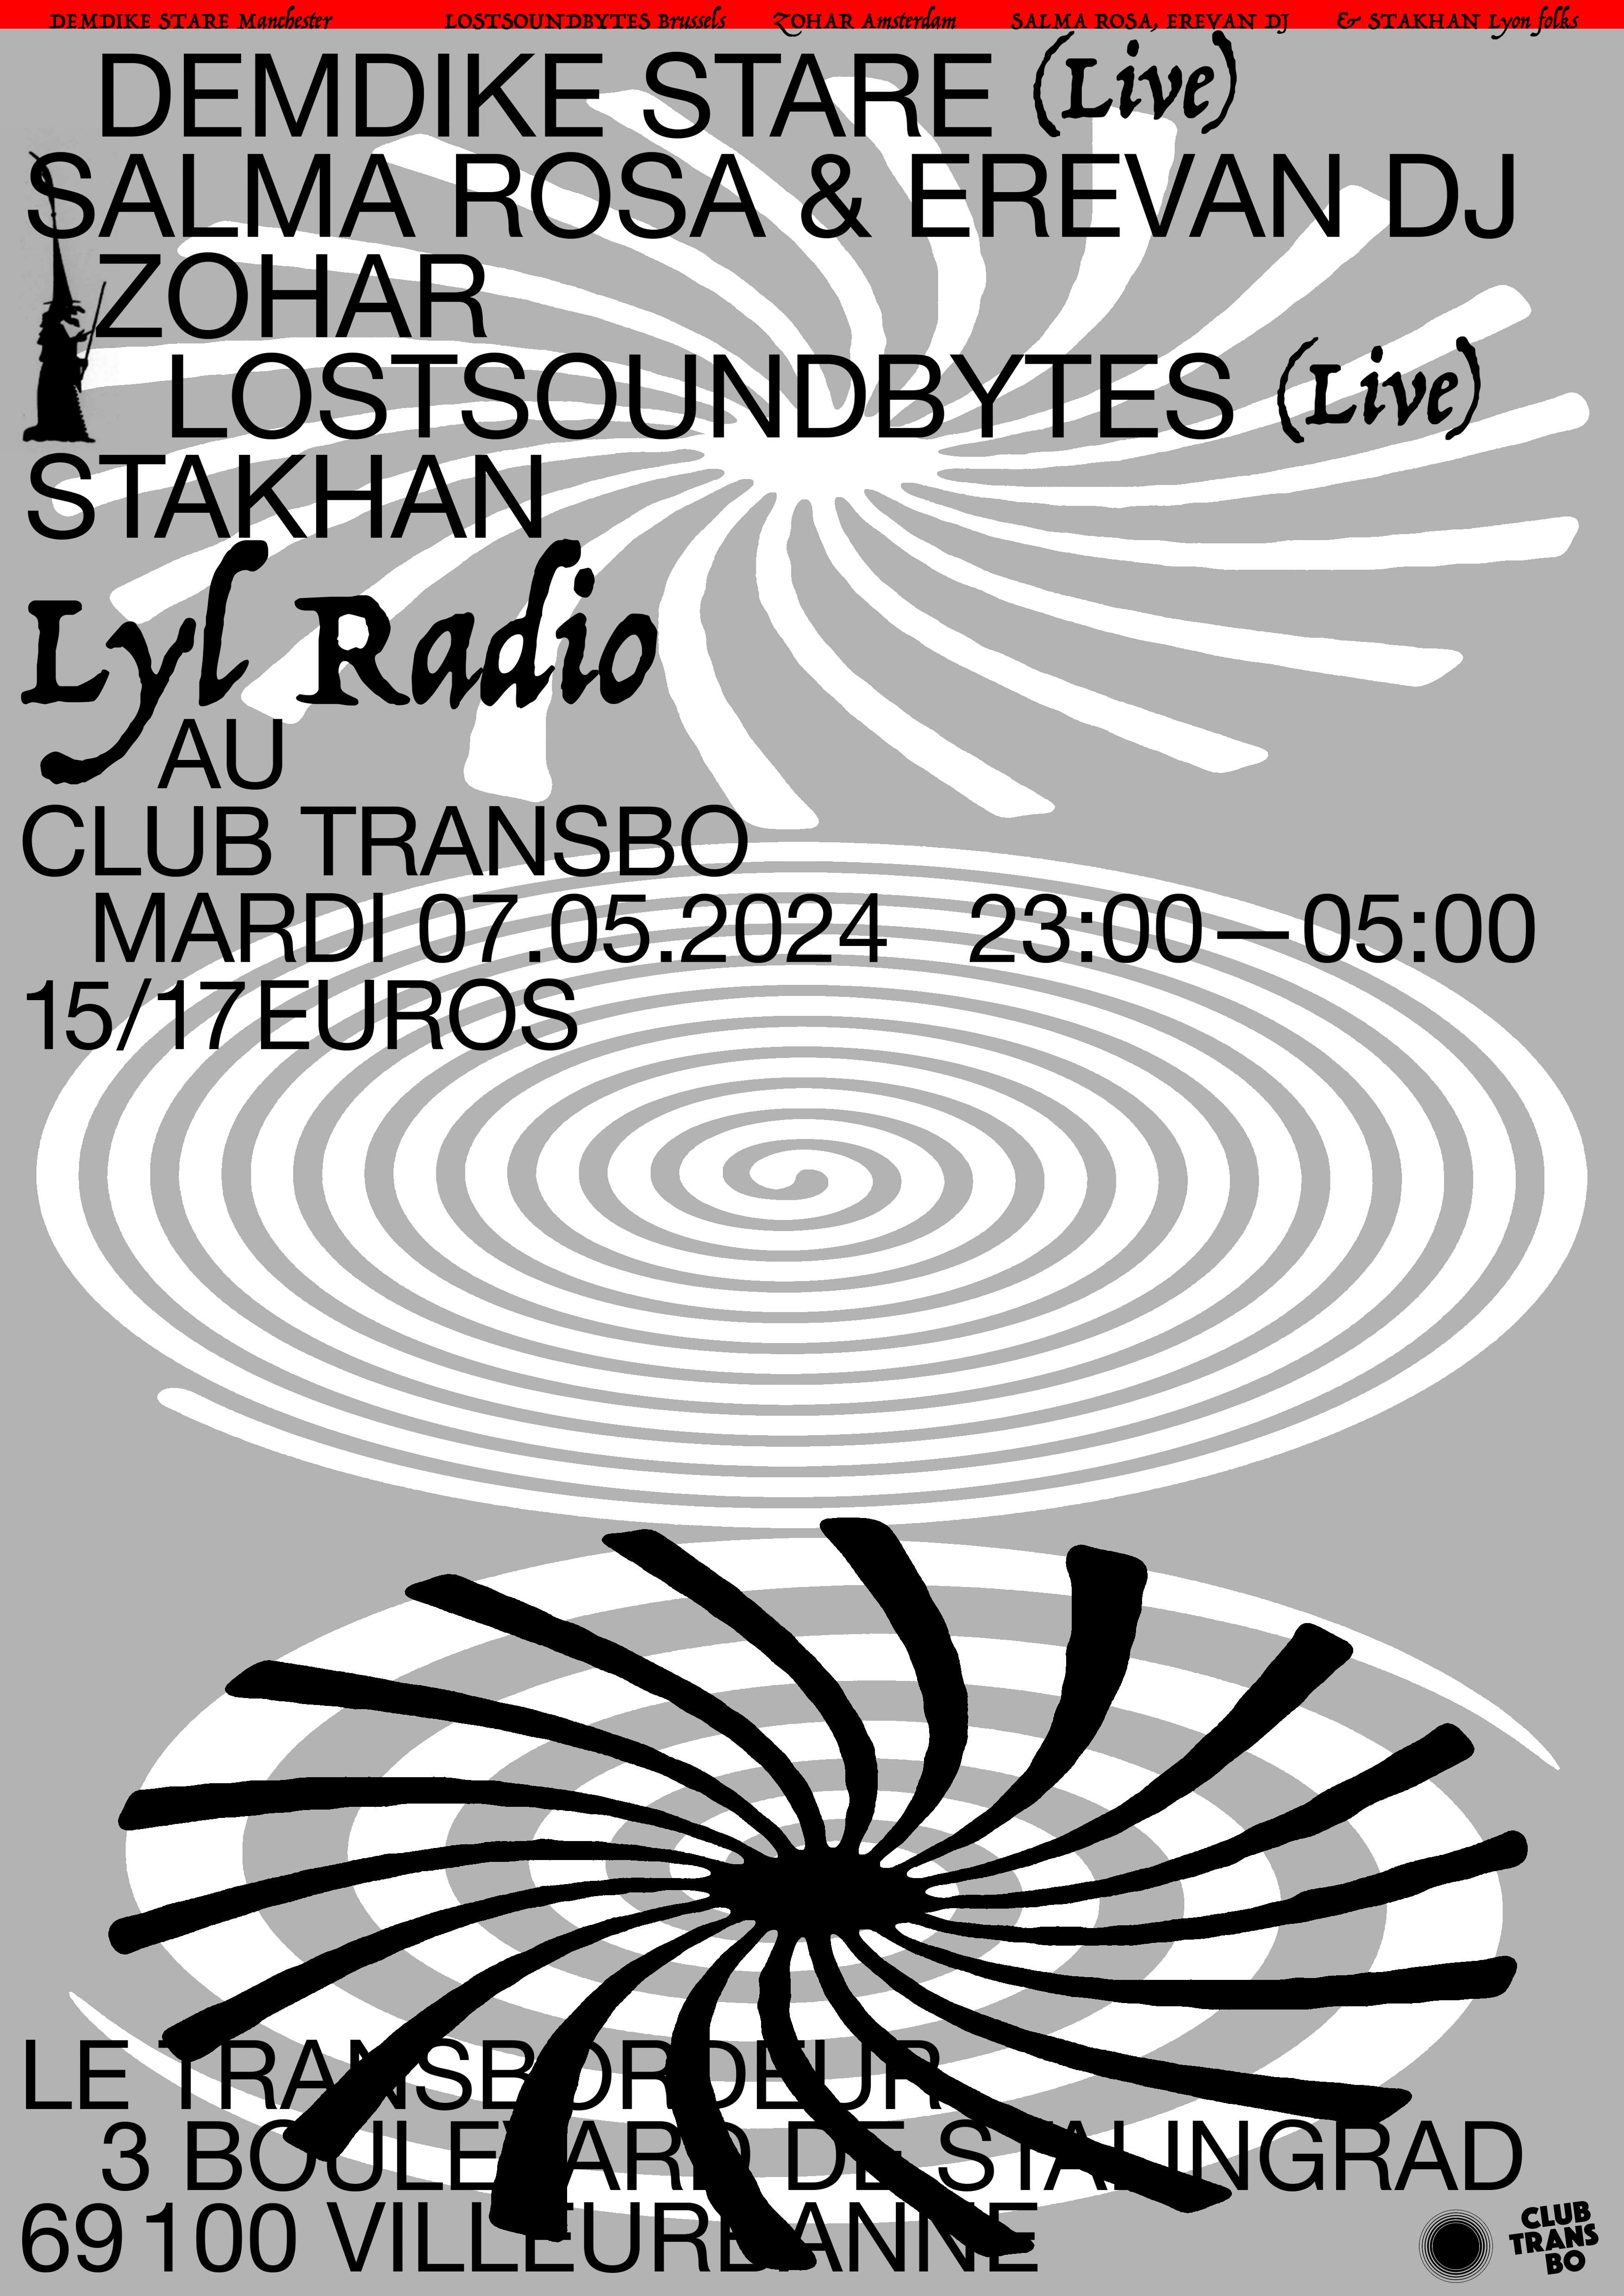 LYL RADIO at Club Transbo with Demdike Stare, Zohar, Lostsoundbytes - フライヤー表